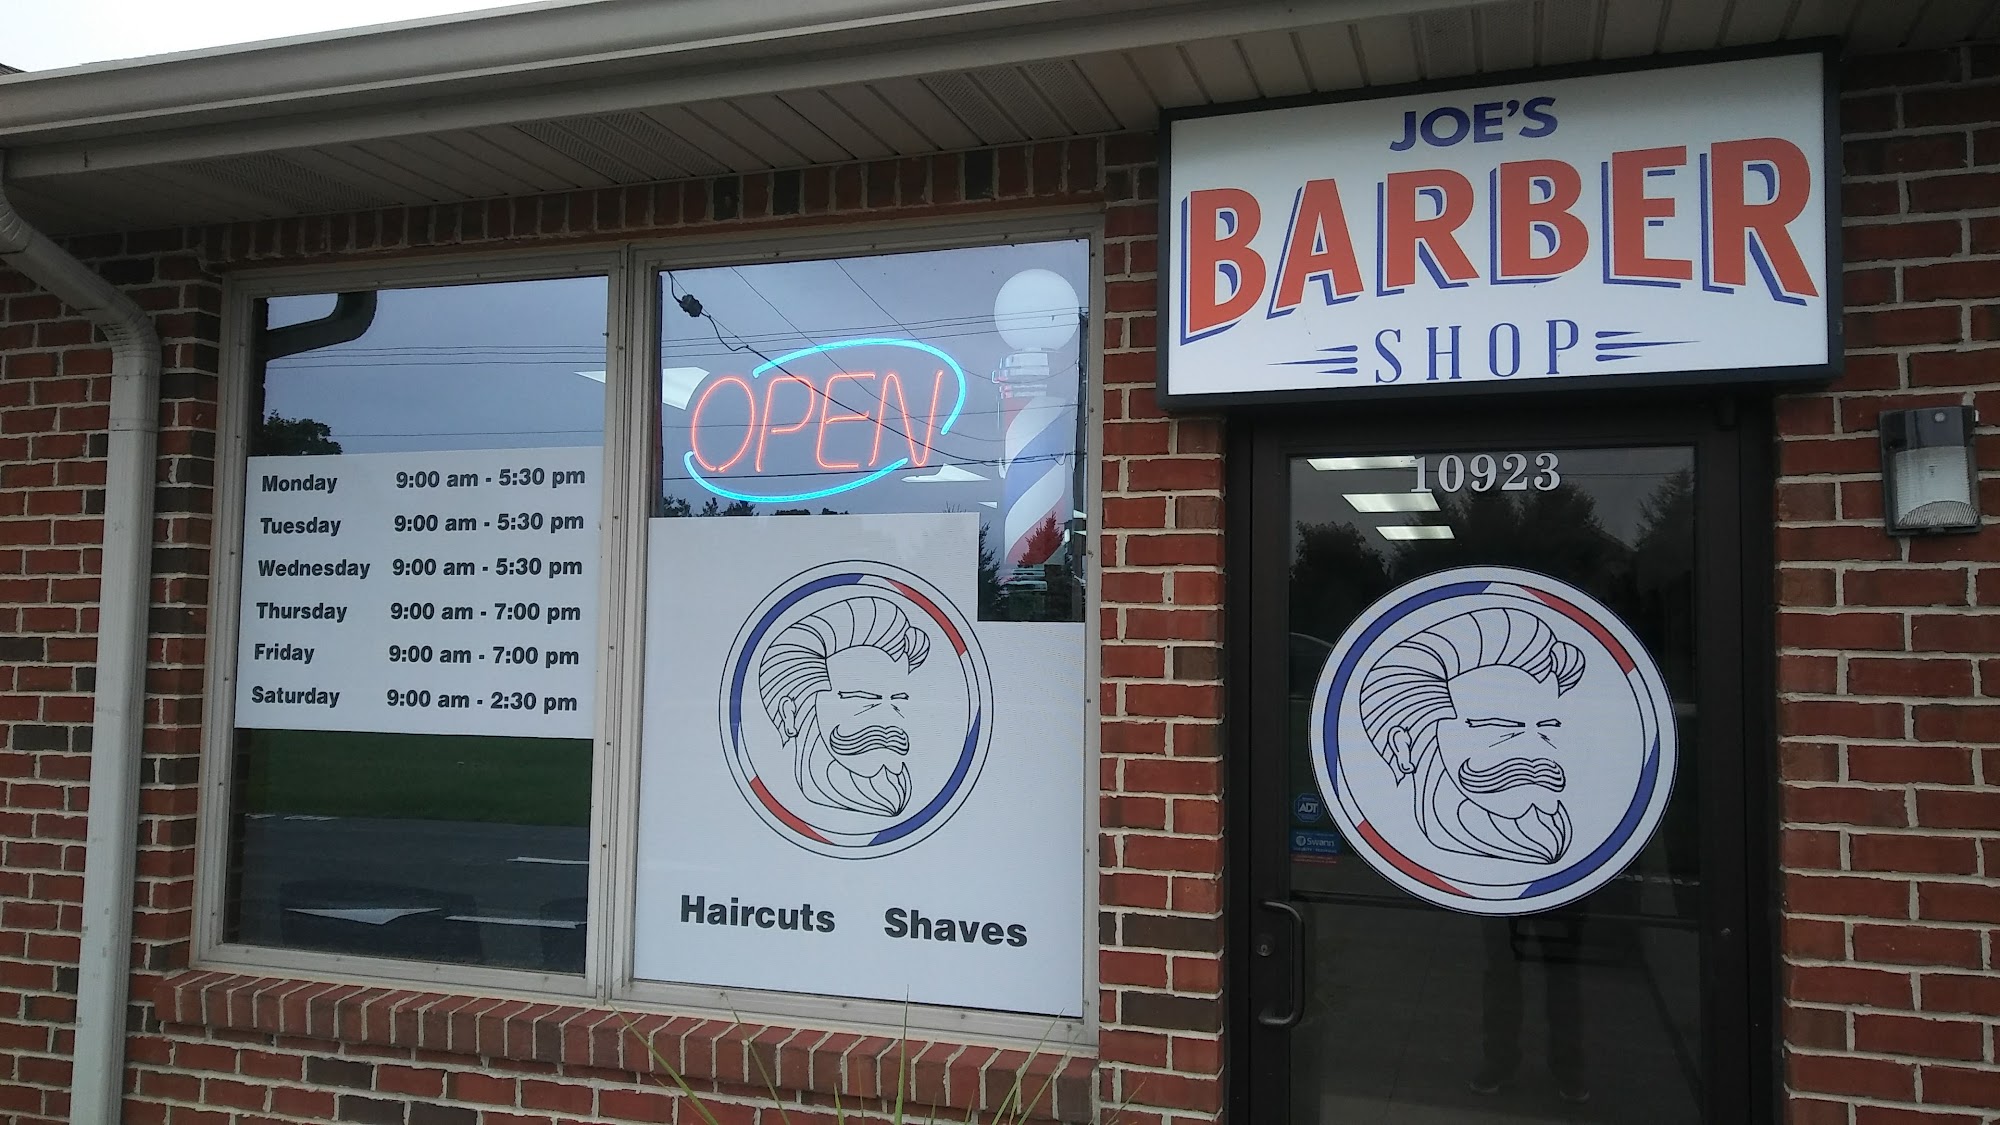 Joe’s Barber Shop Winfield 10923 Miami St #9421, Winfield Indiana 46307